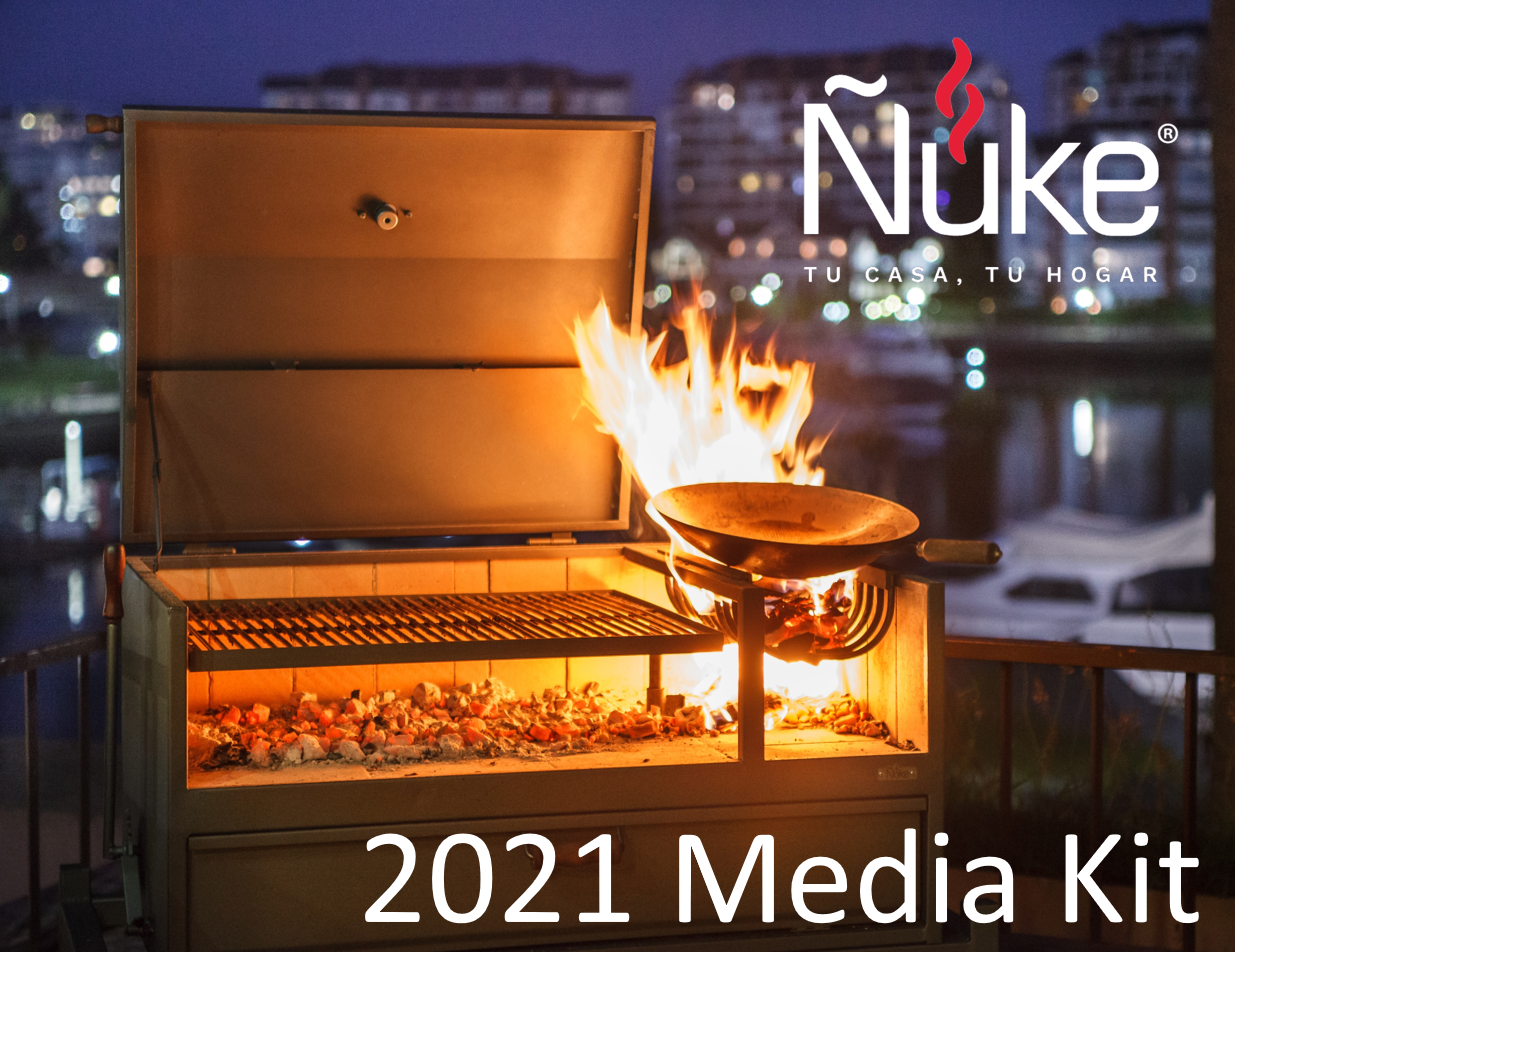 Ñuke Press Kit and Media Contact